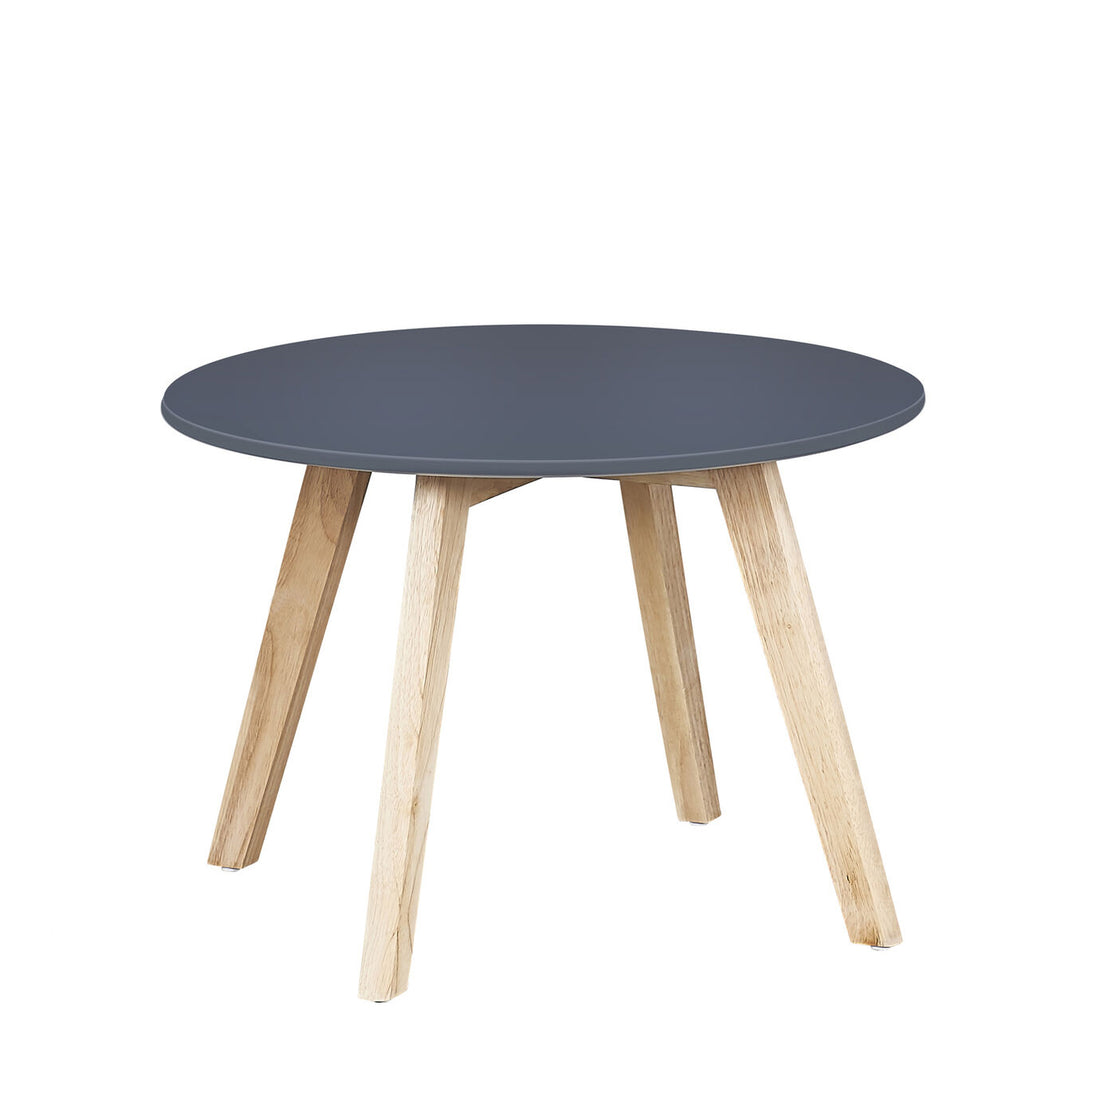 quax-kids-table-grey-quax-76lf-02-002- (1)